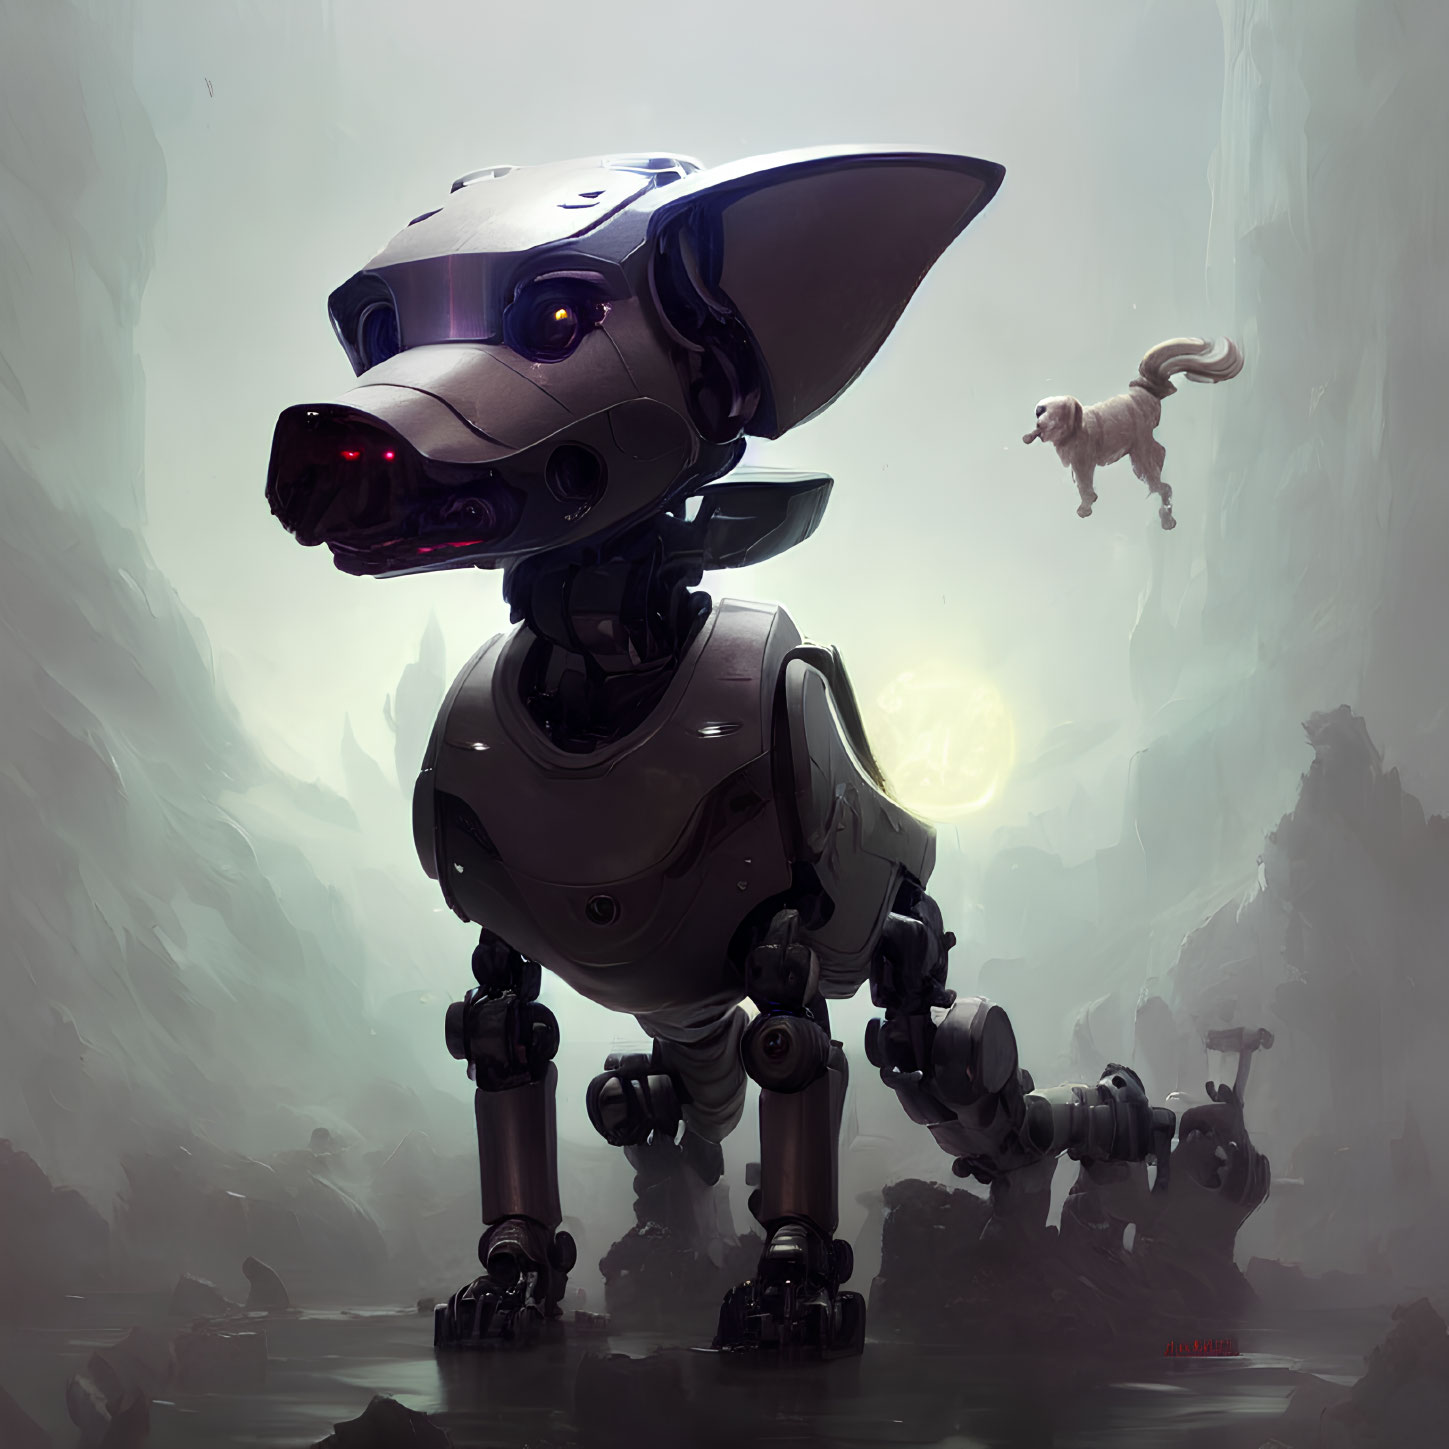 Stylized robotic dog in misty landscape with playful natural dog